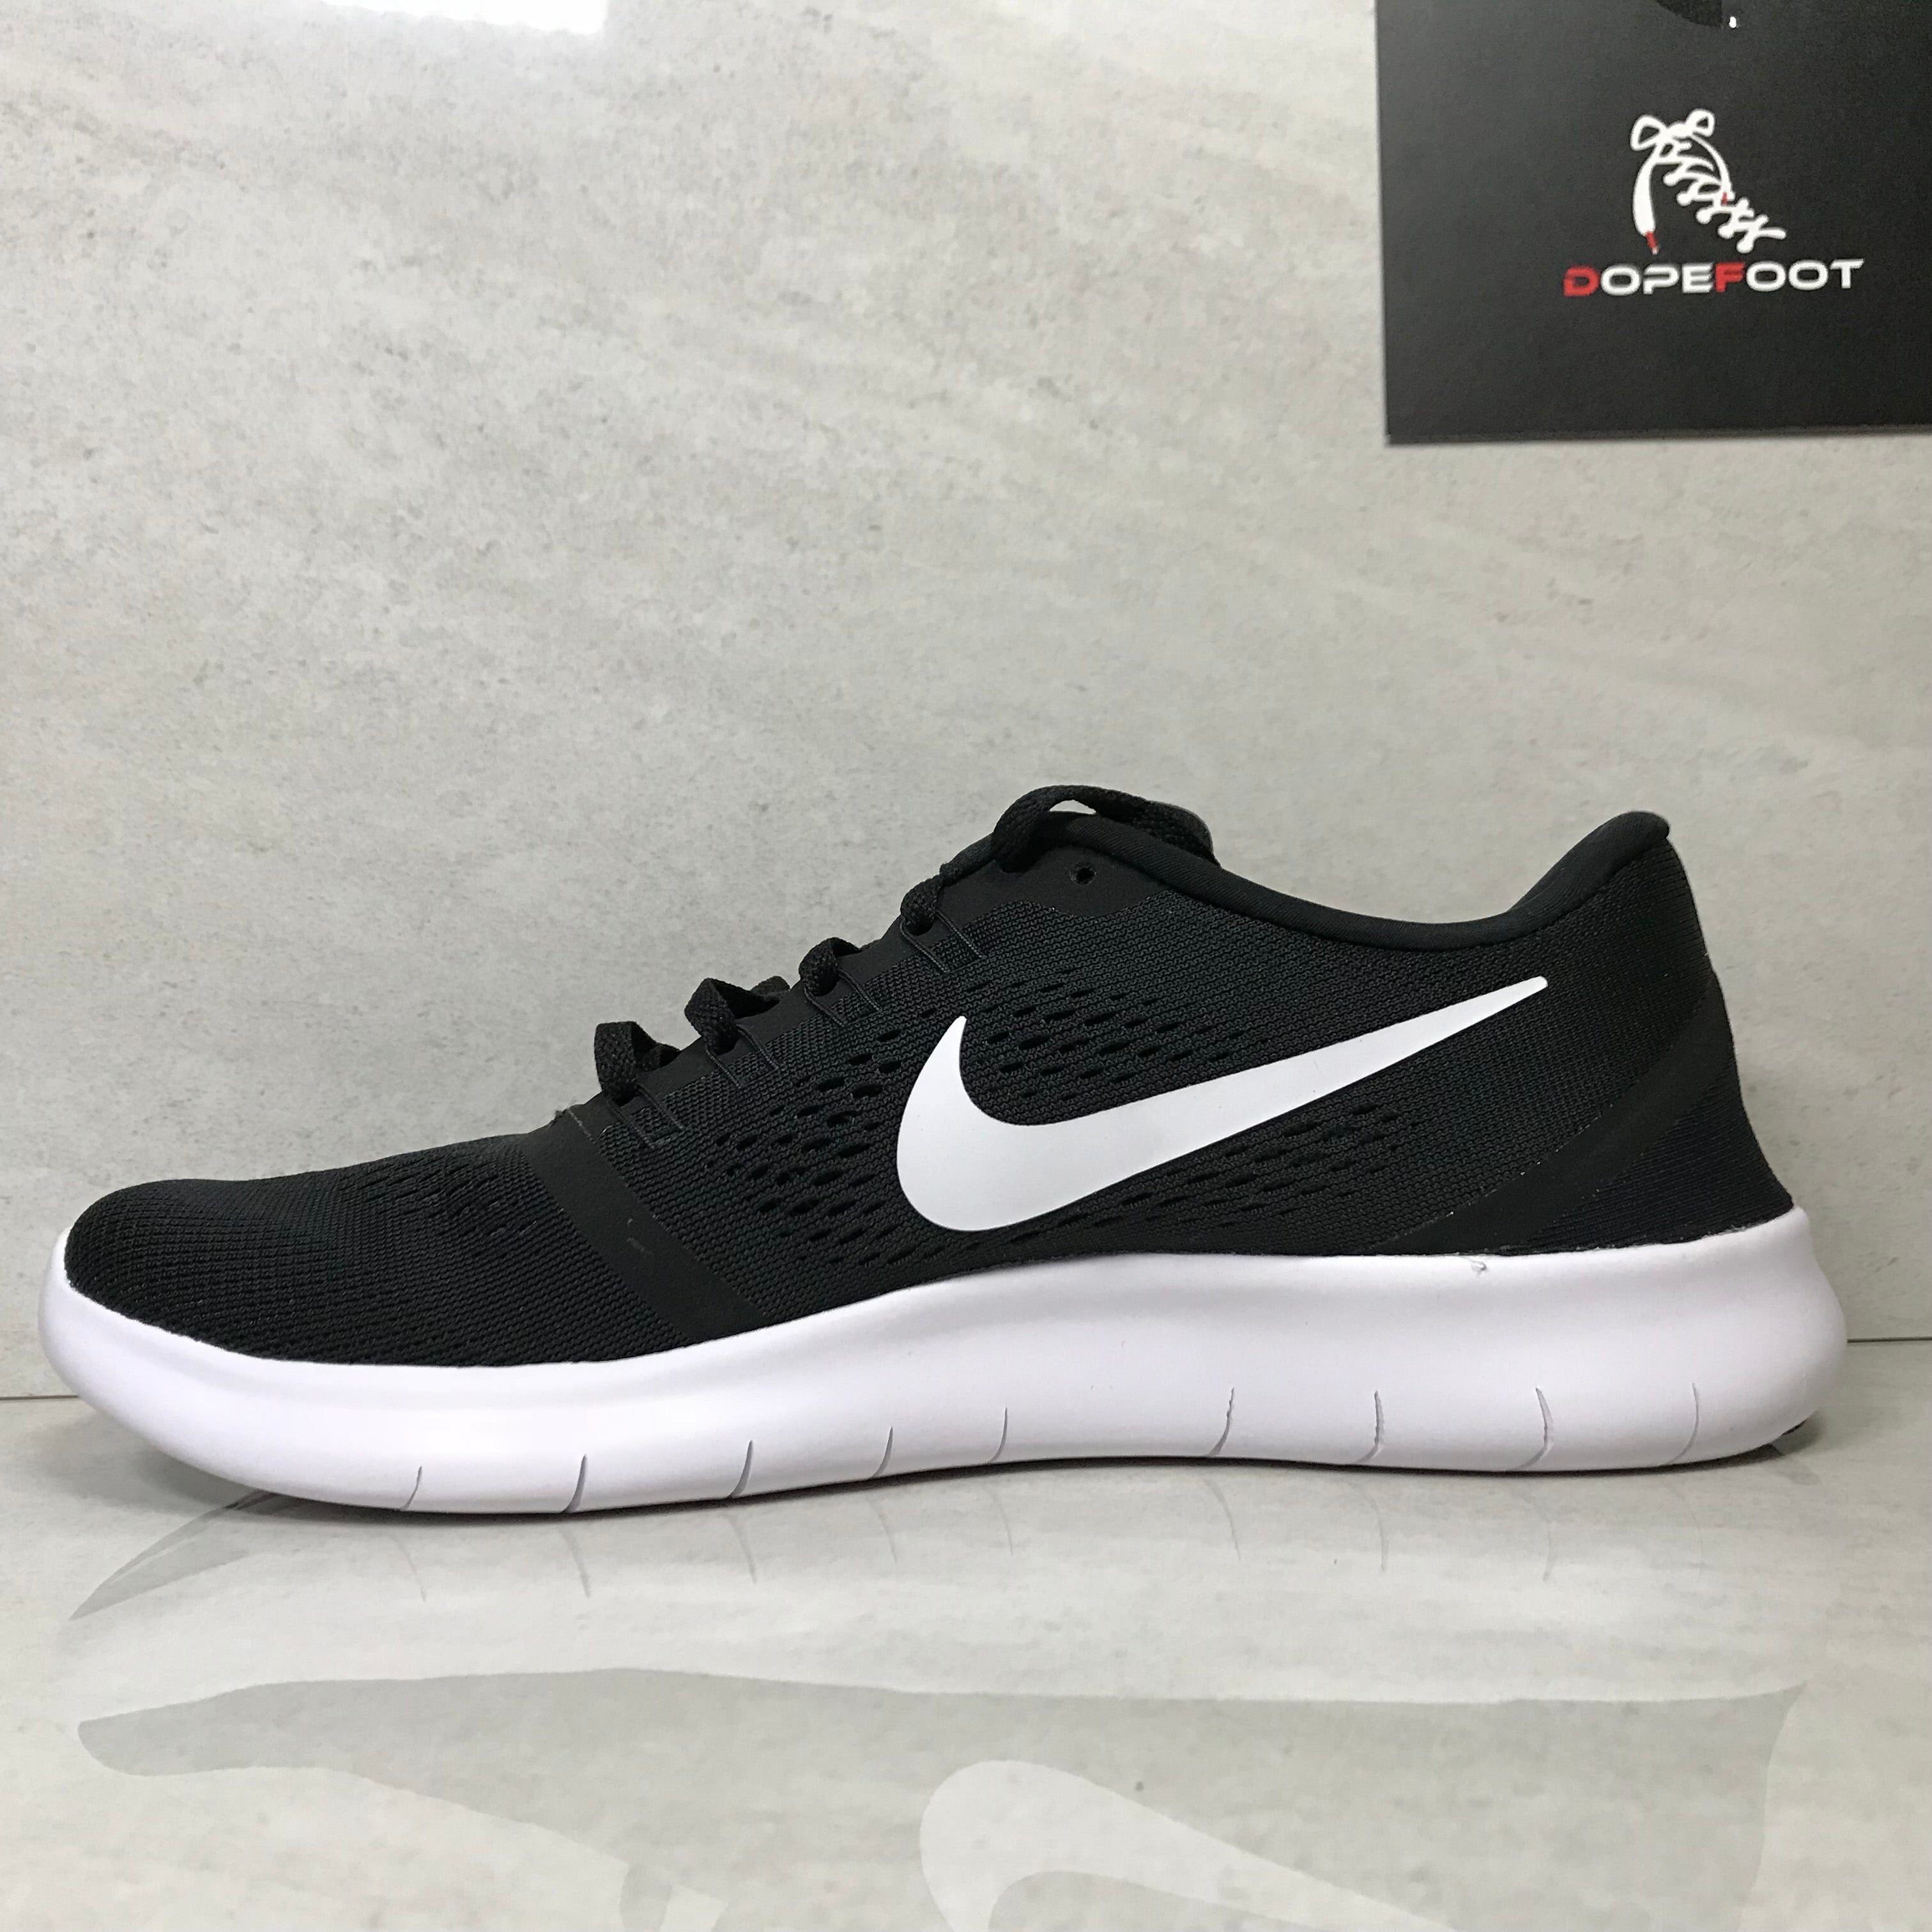 DS Nike Free Run Black/White Size 9/9.5 